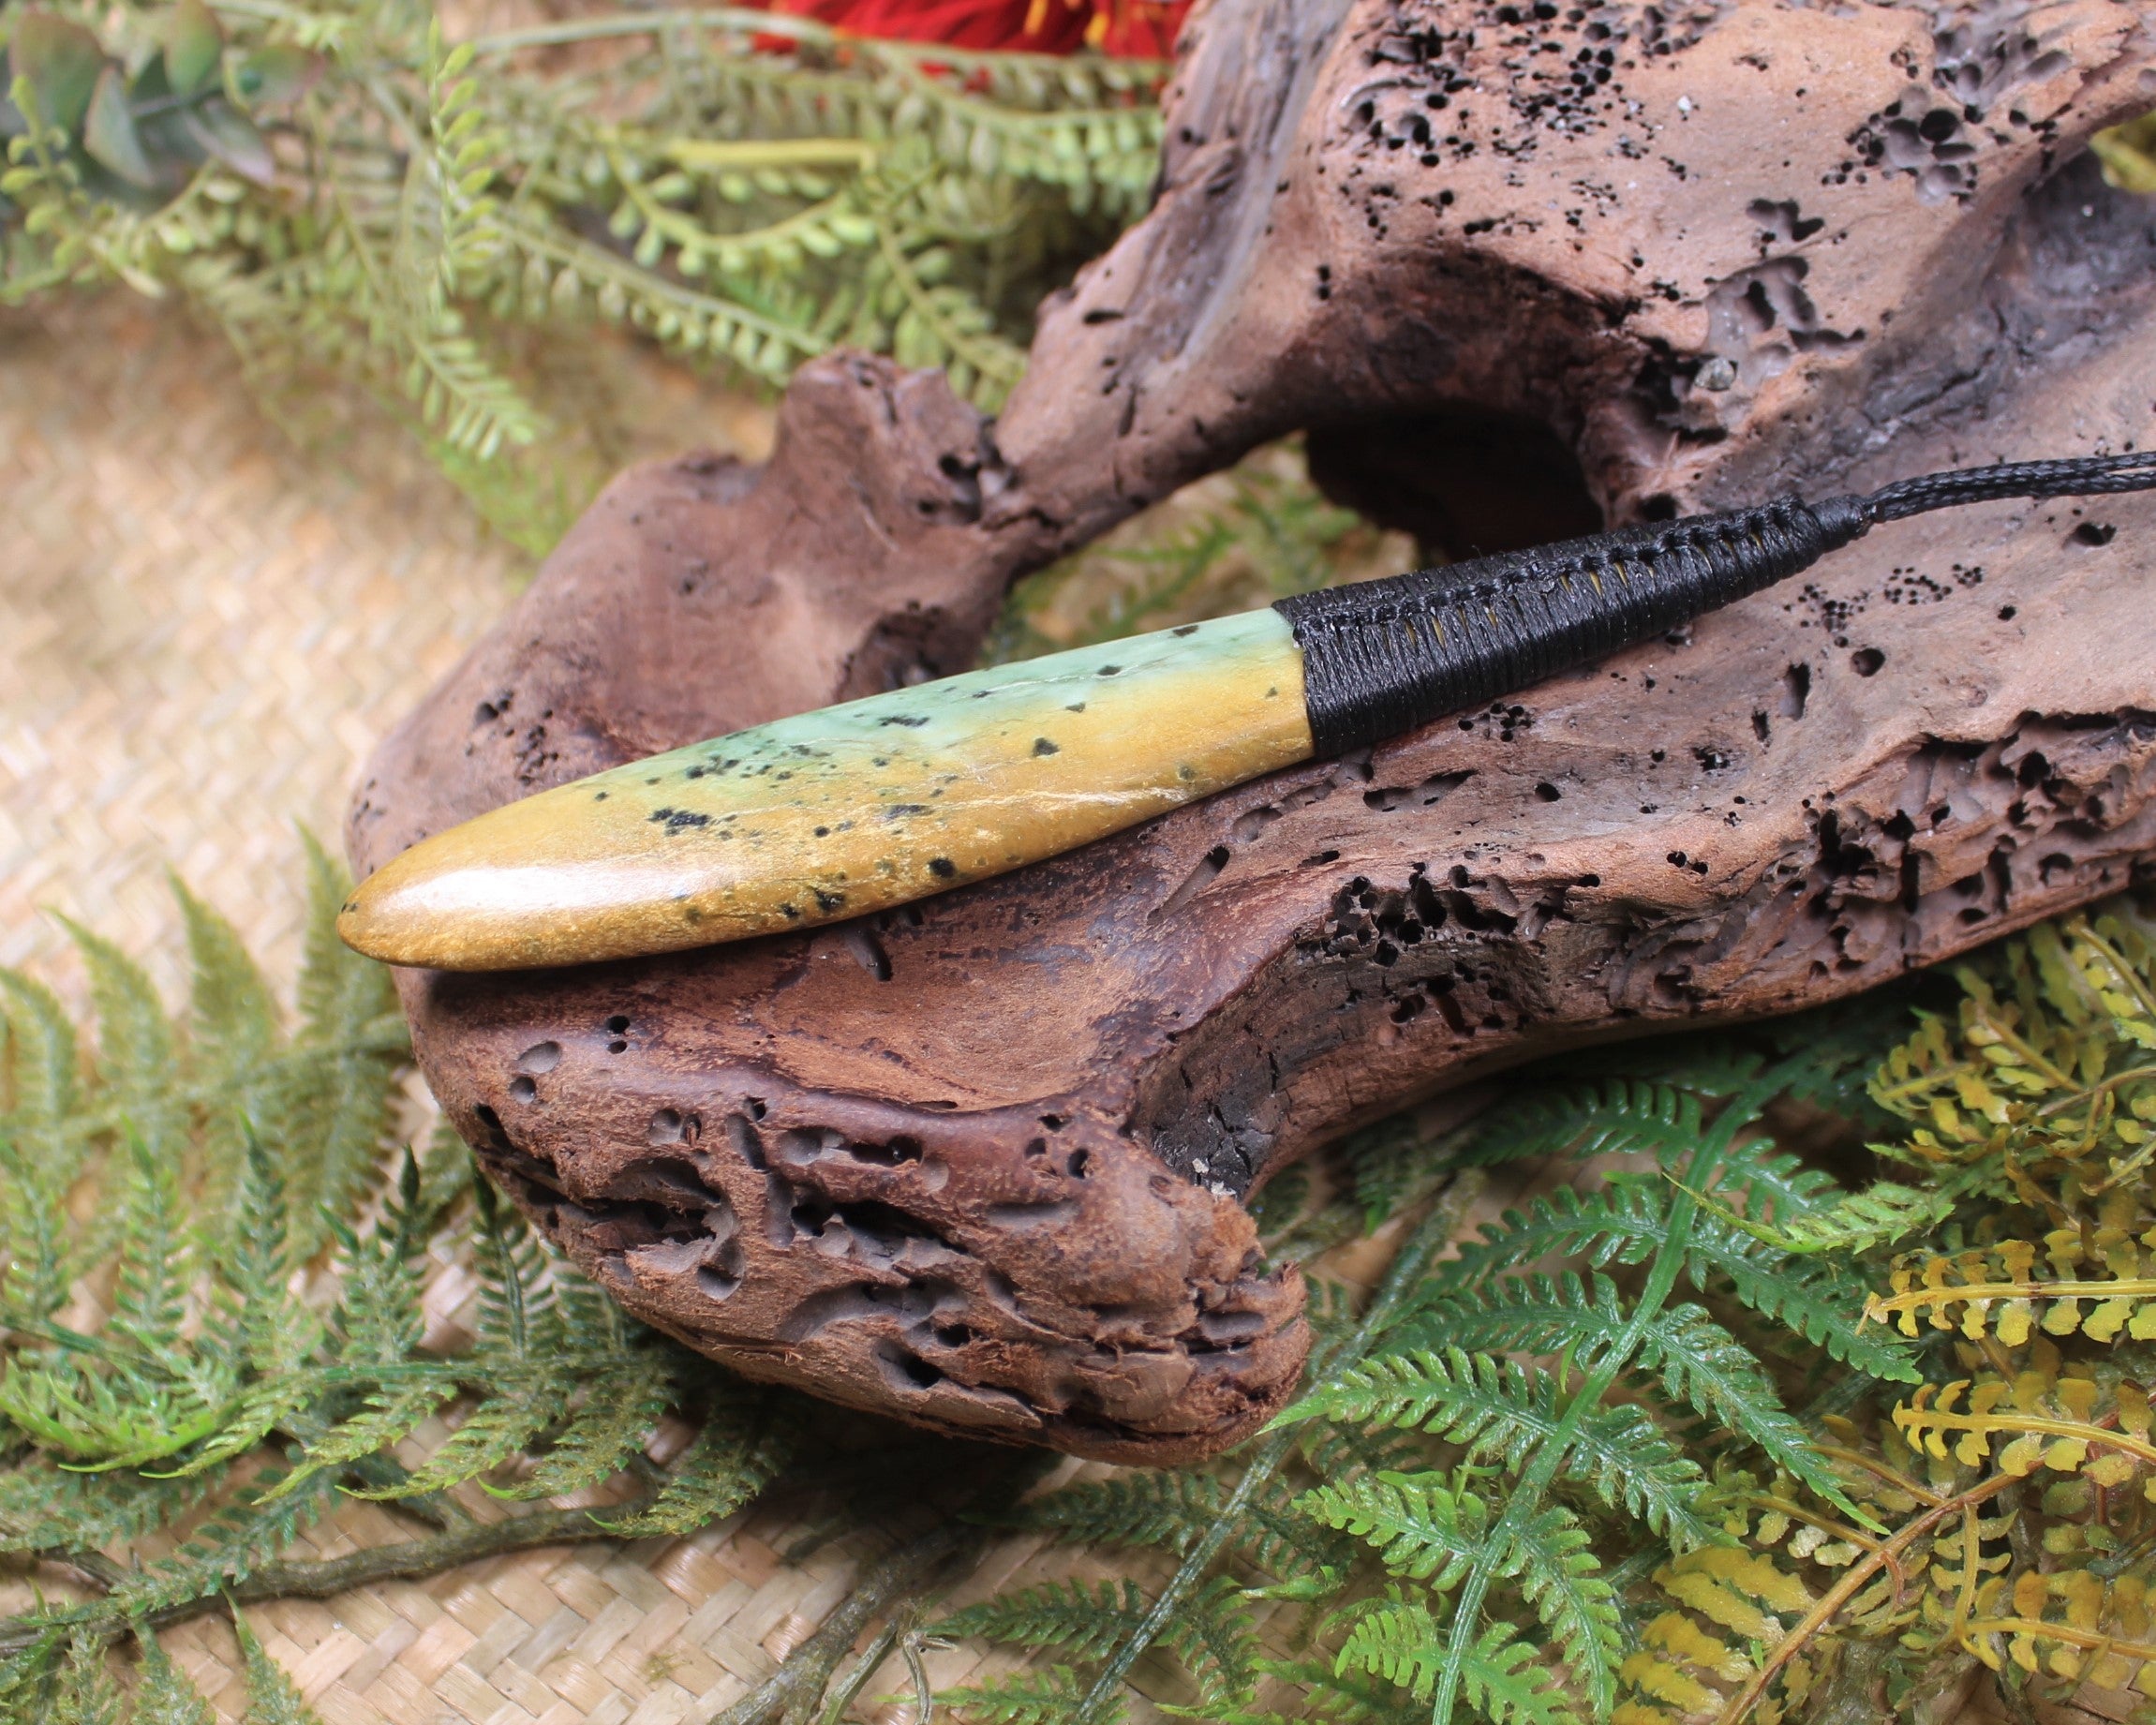 Roimata Teardrop carved from Flower Jade Pounamu - NZ Greenstone